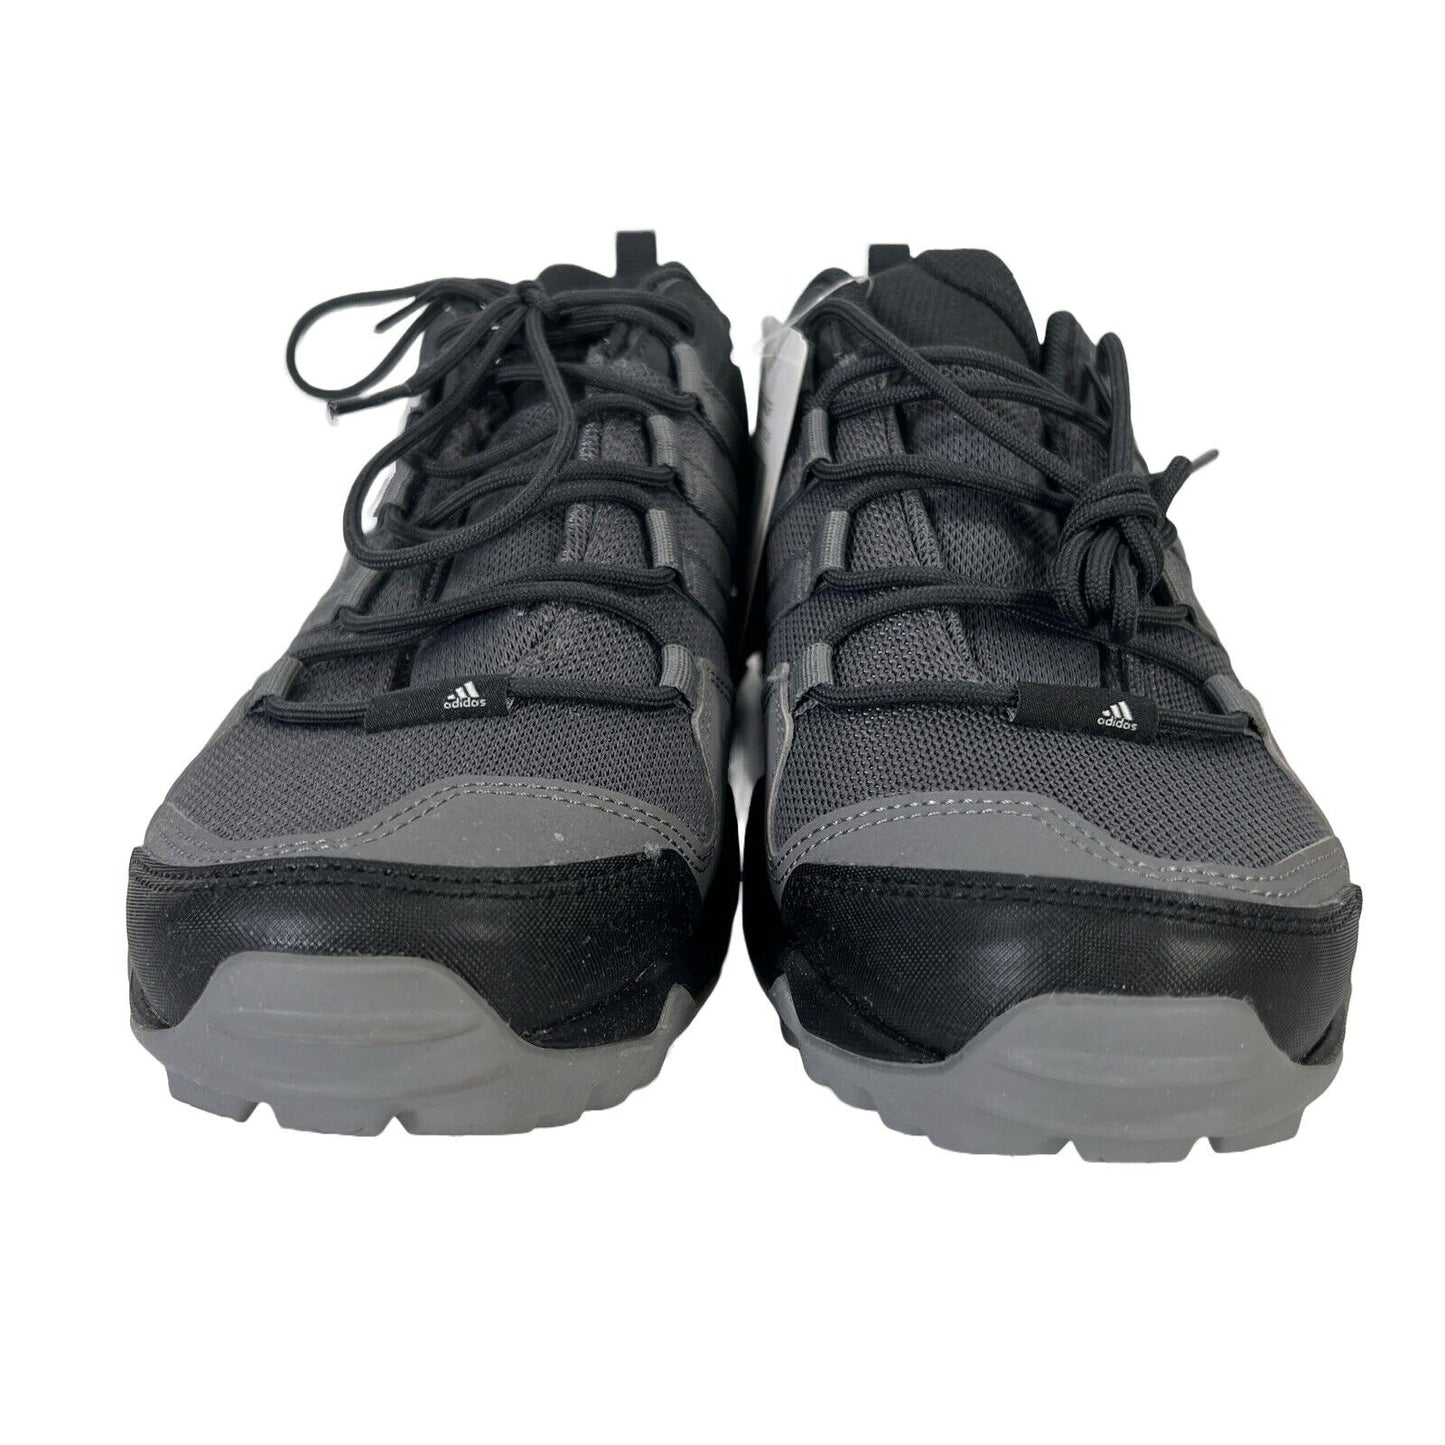 NEW adidas Men's Gray Terrex AX2R Athletic Shoes - 9